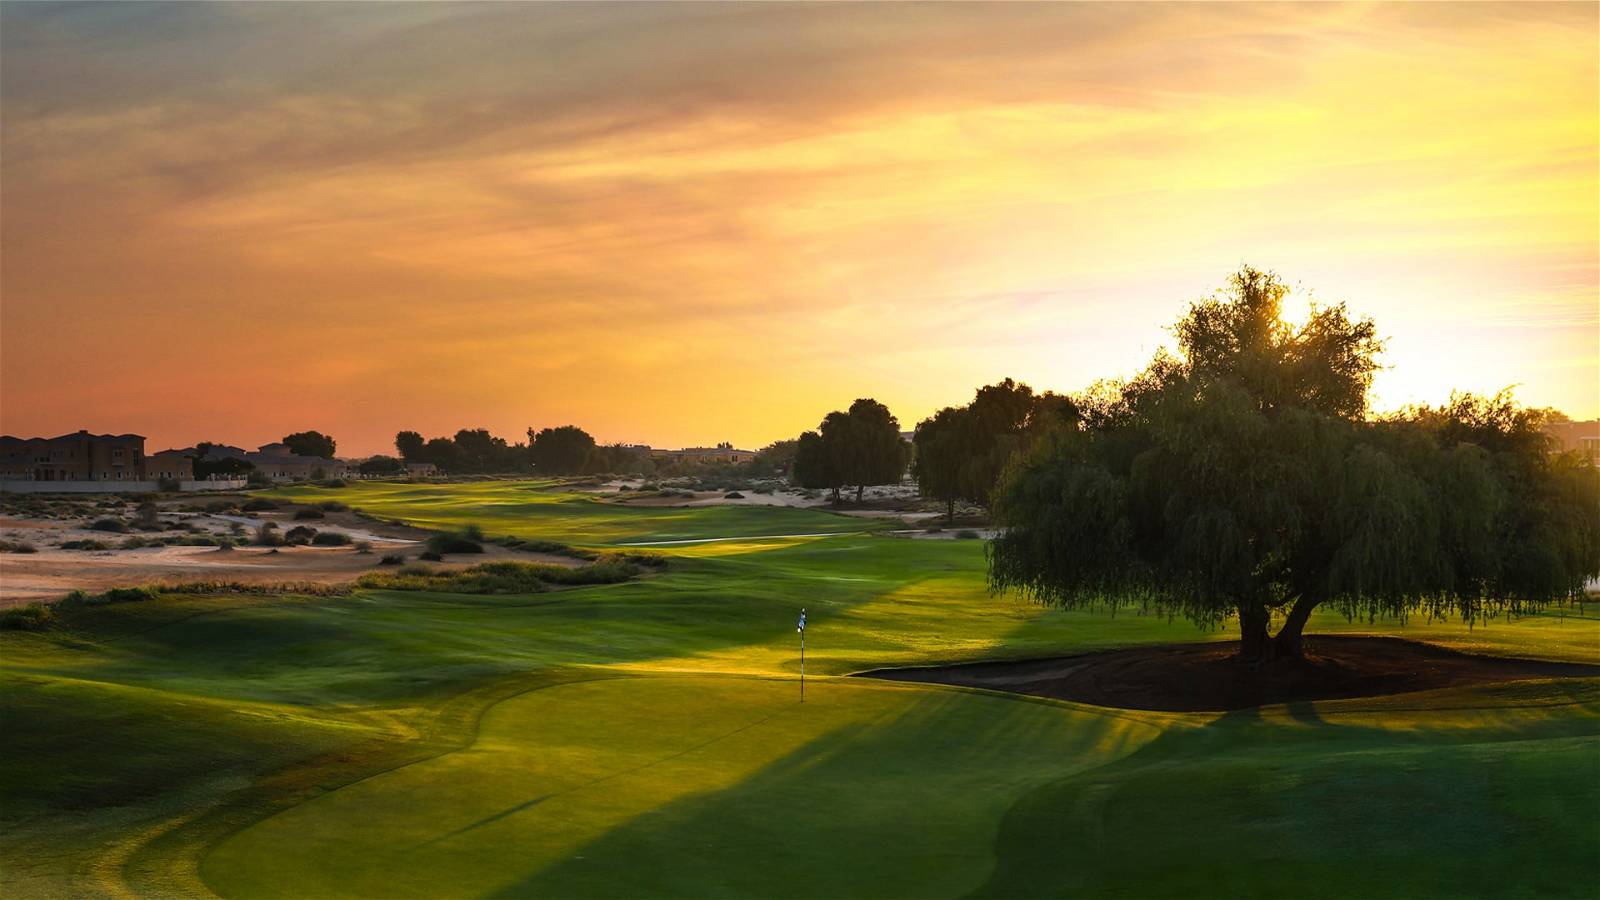 Green, Arabian Ranches Golf Course, Dubai, United Arab Emirates